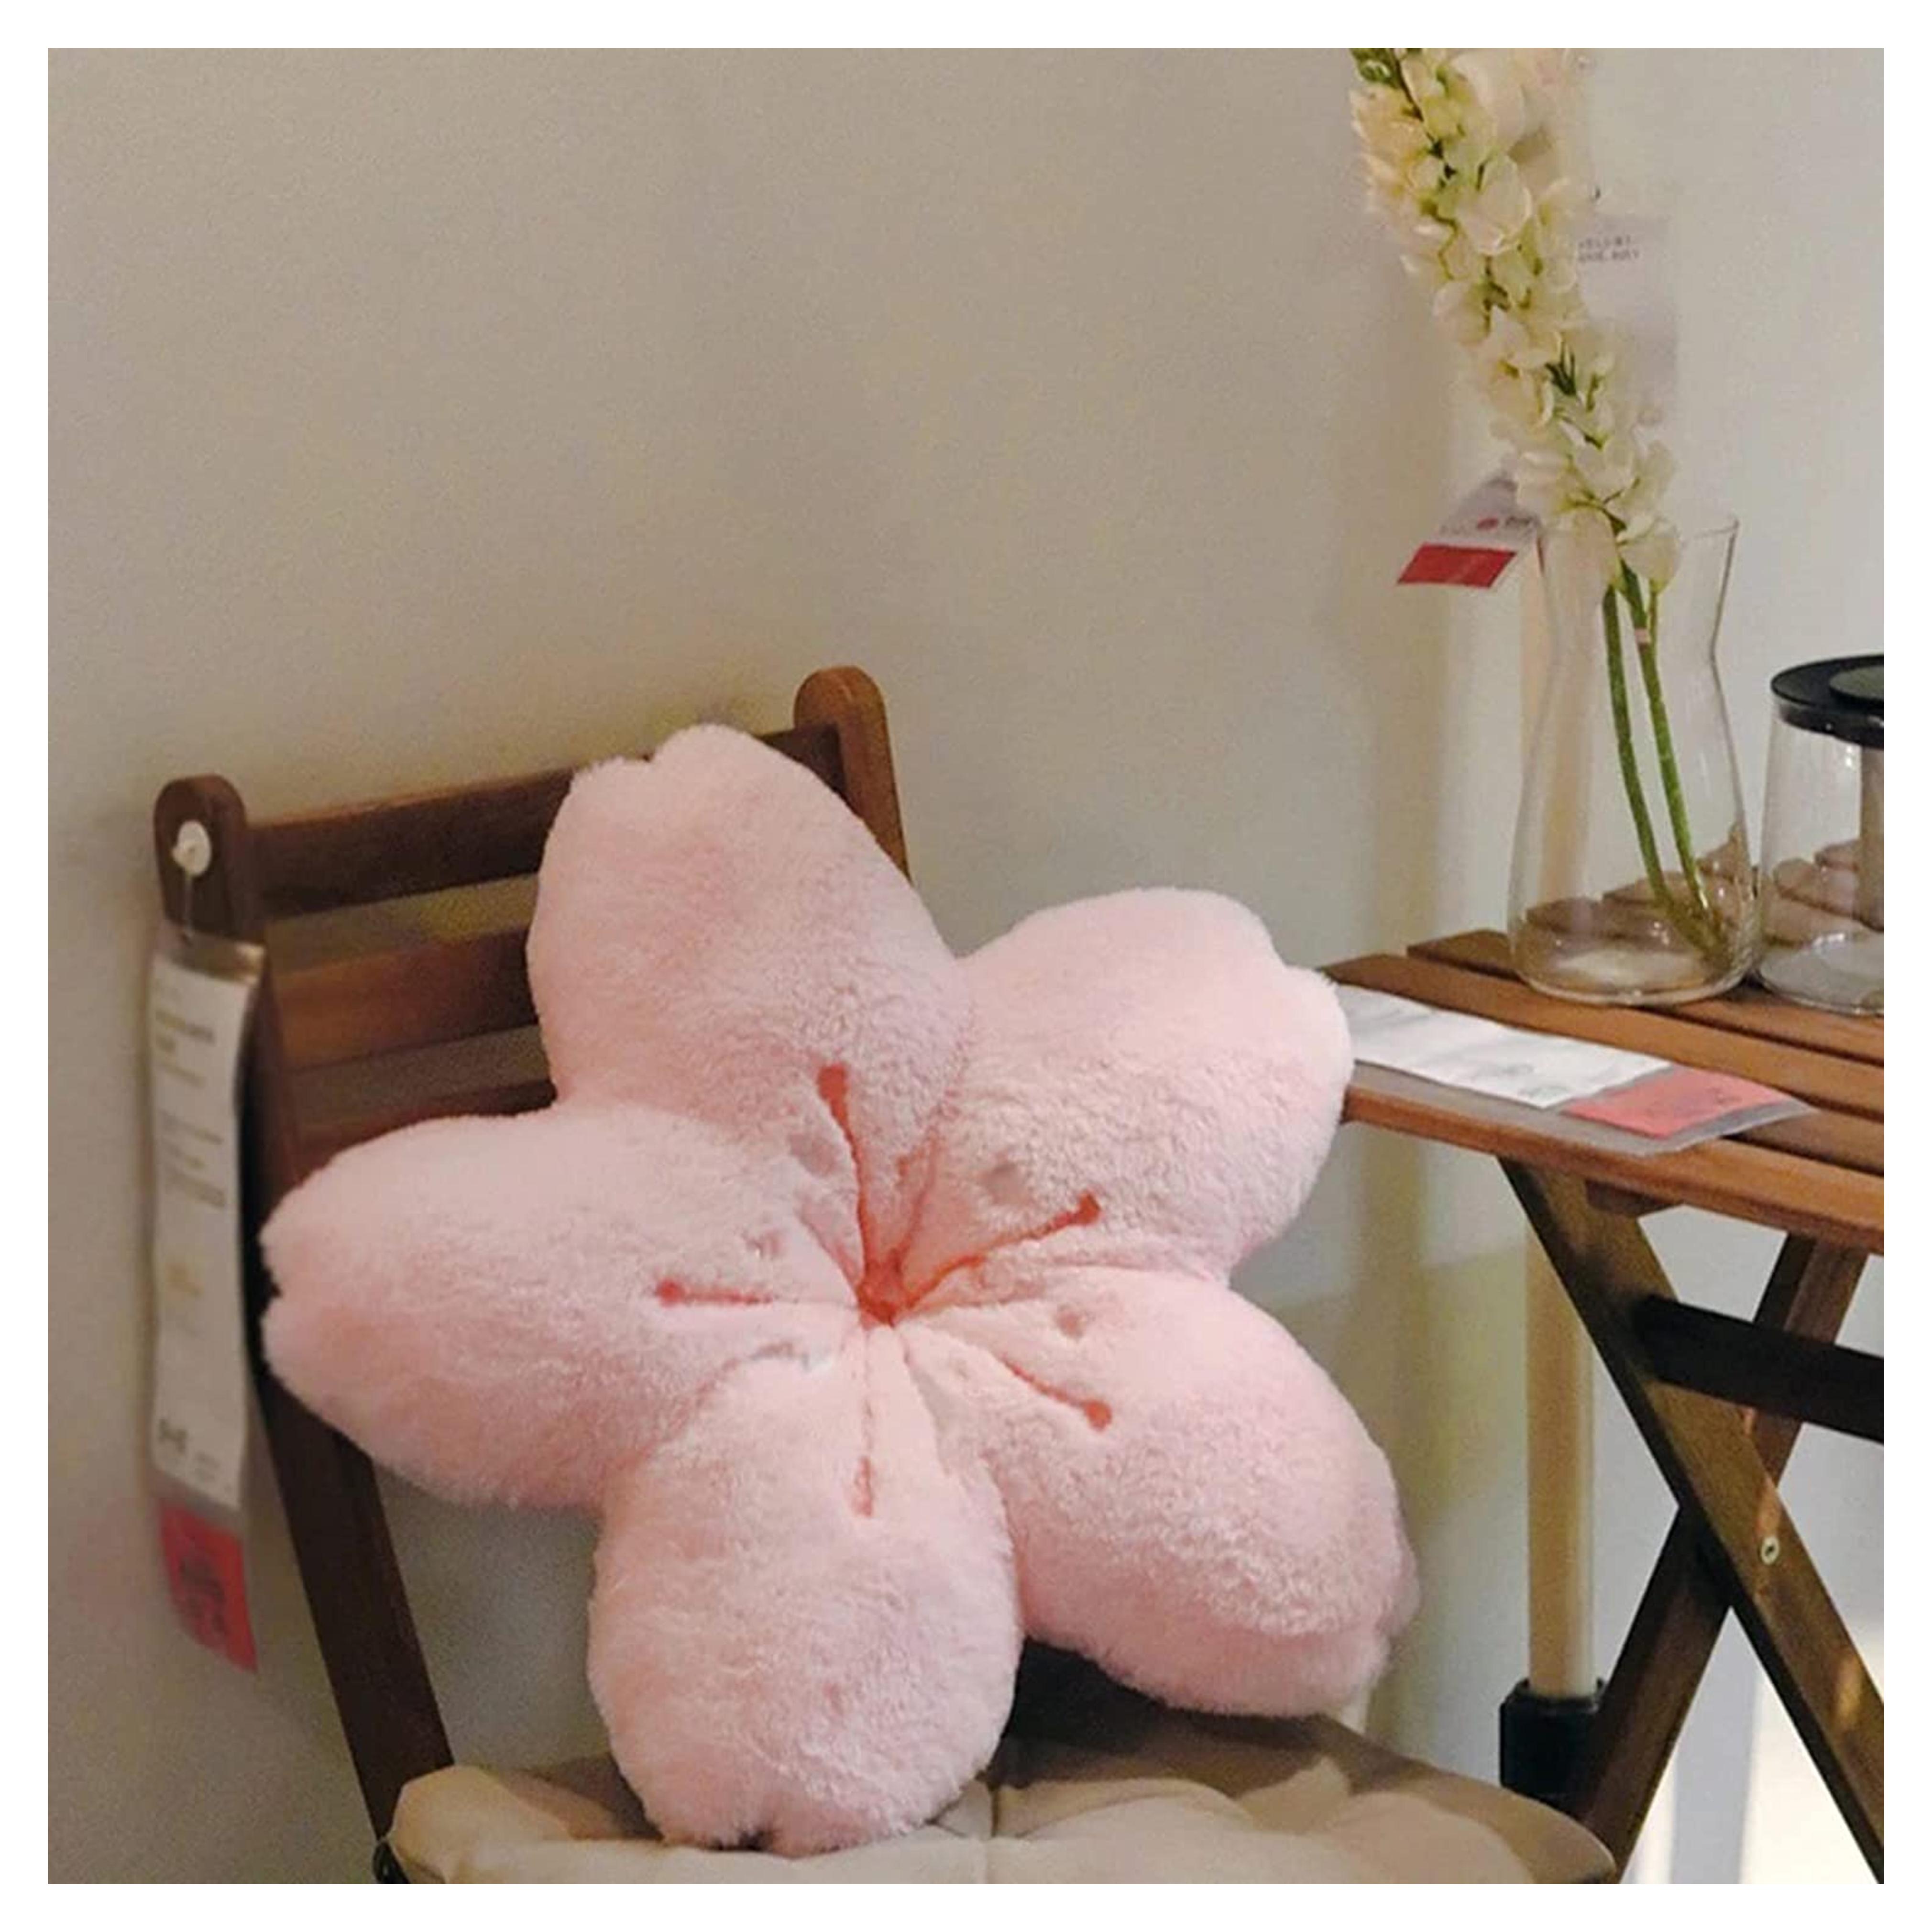 Cherry Blossom Pillow Kawaii Room Decor Japanese Kawaii Stuff Aesthetic Plush Pillows Decorative for Girls Bed Sofa Car